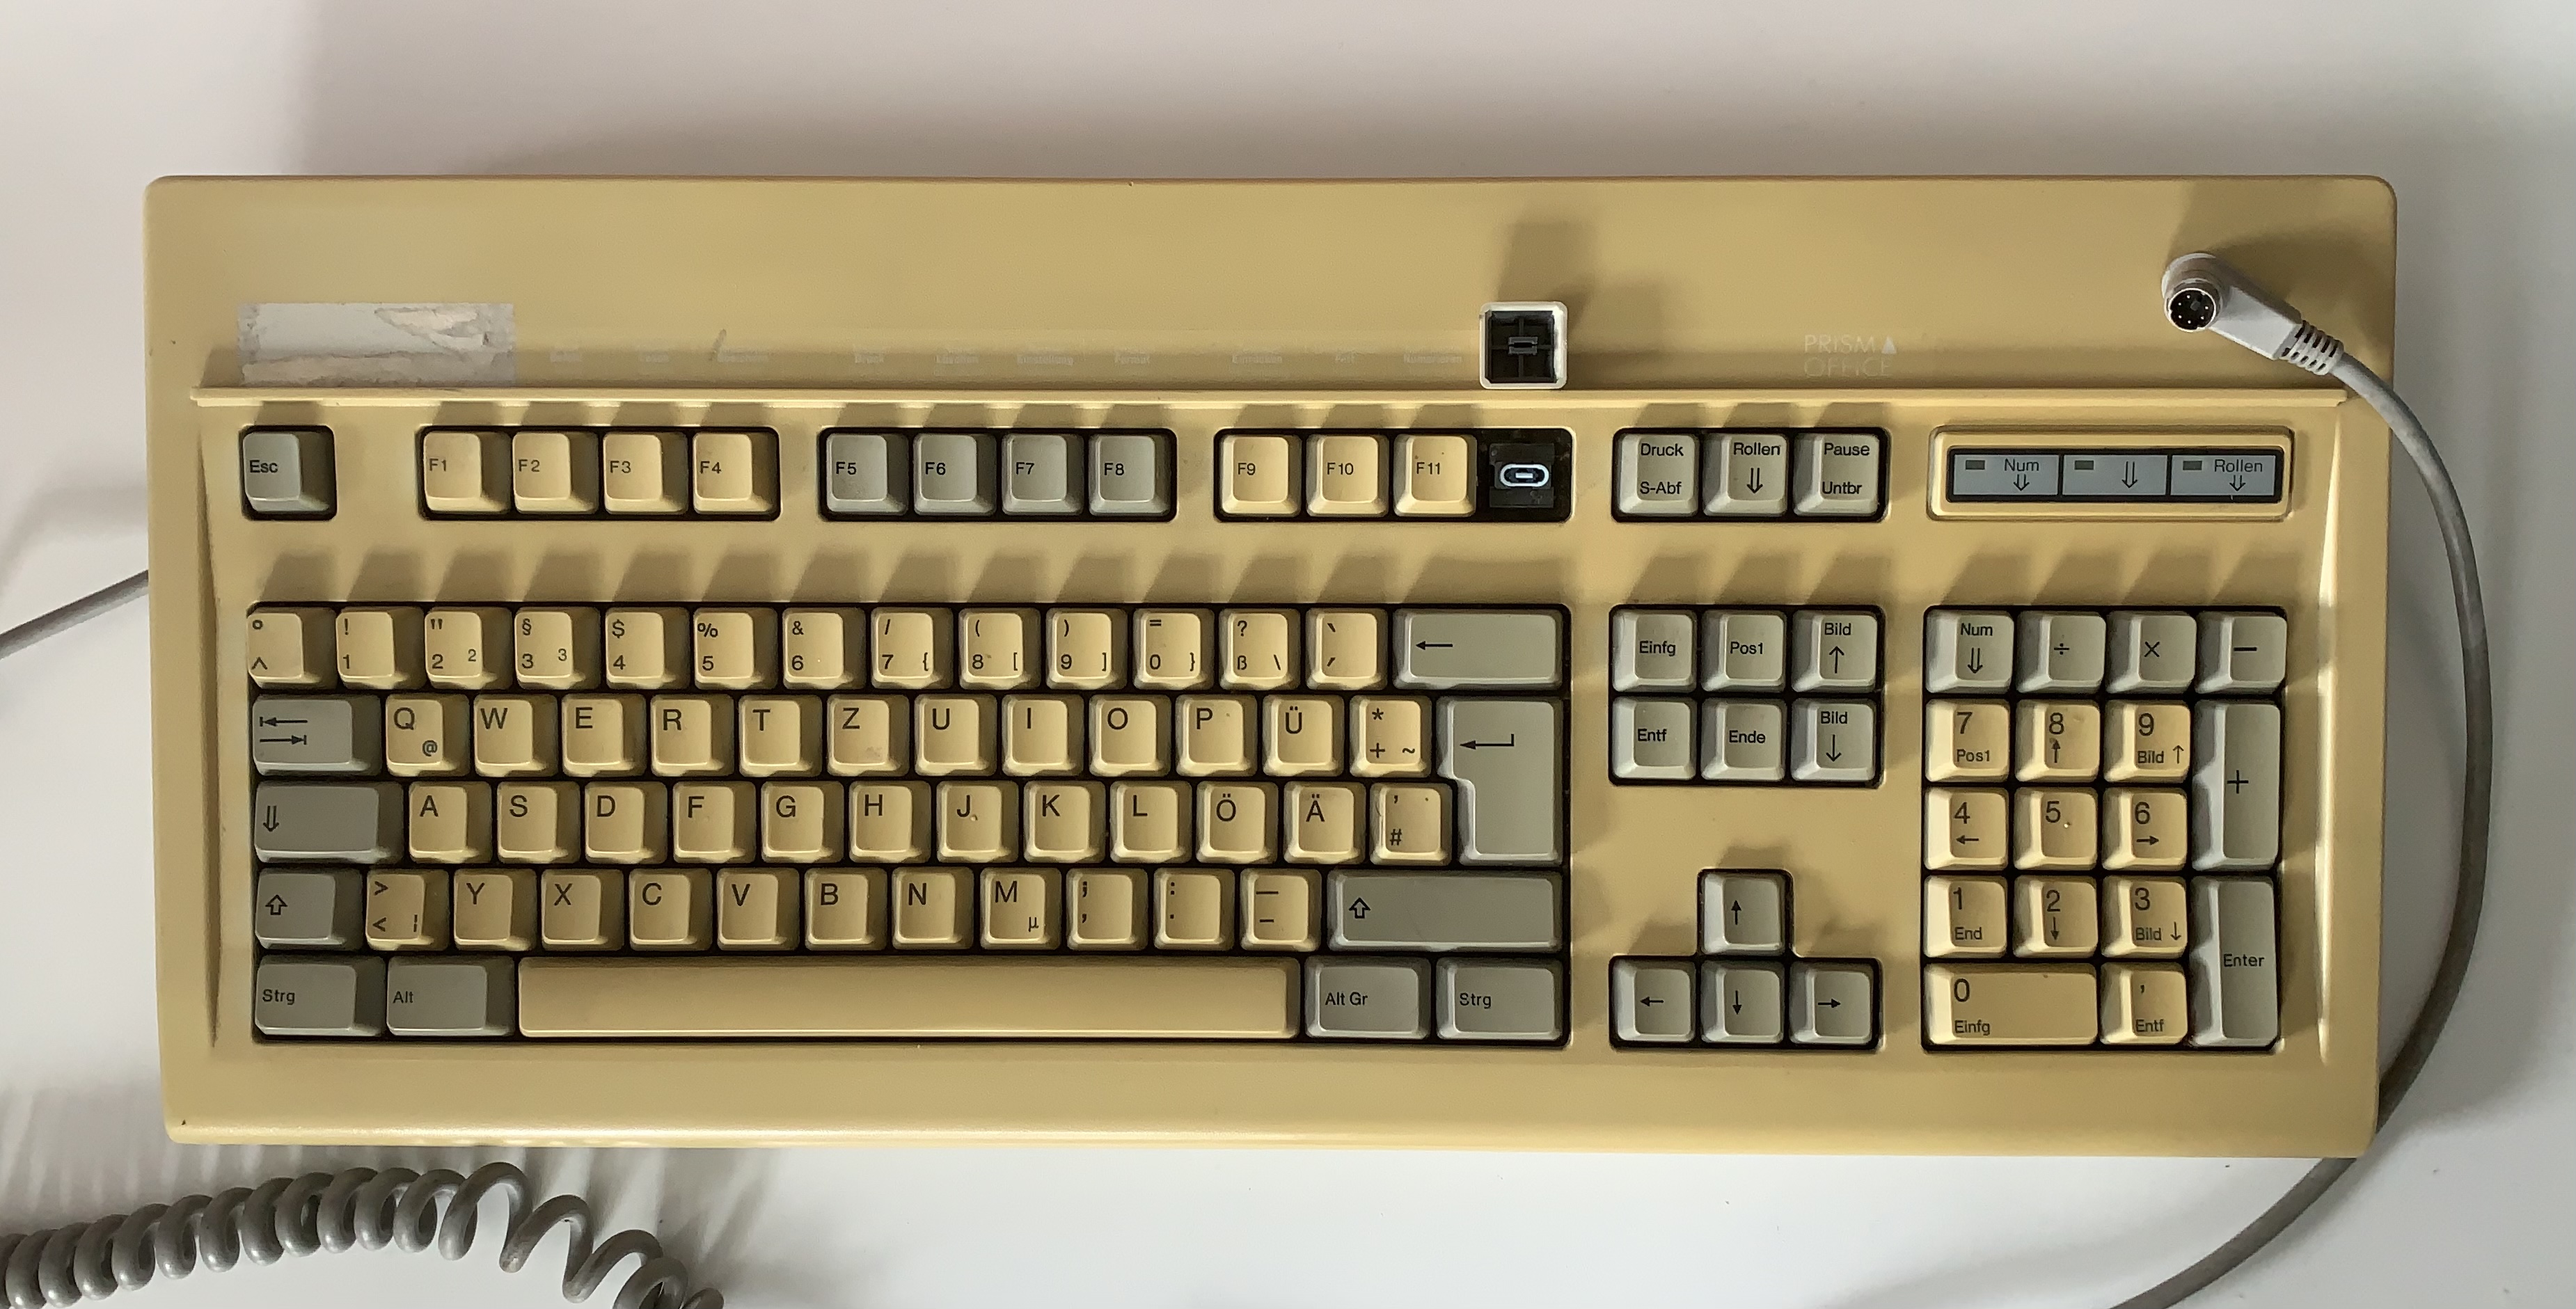 NEC APC-H4124D keyboard, yellowed like a ripe banana